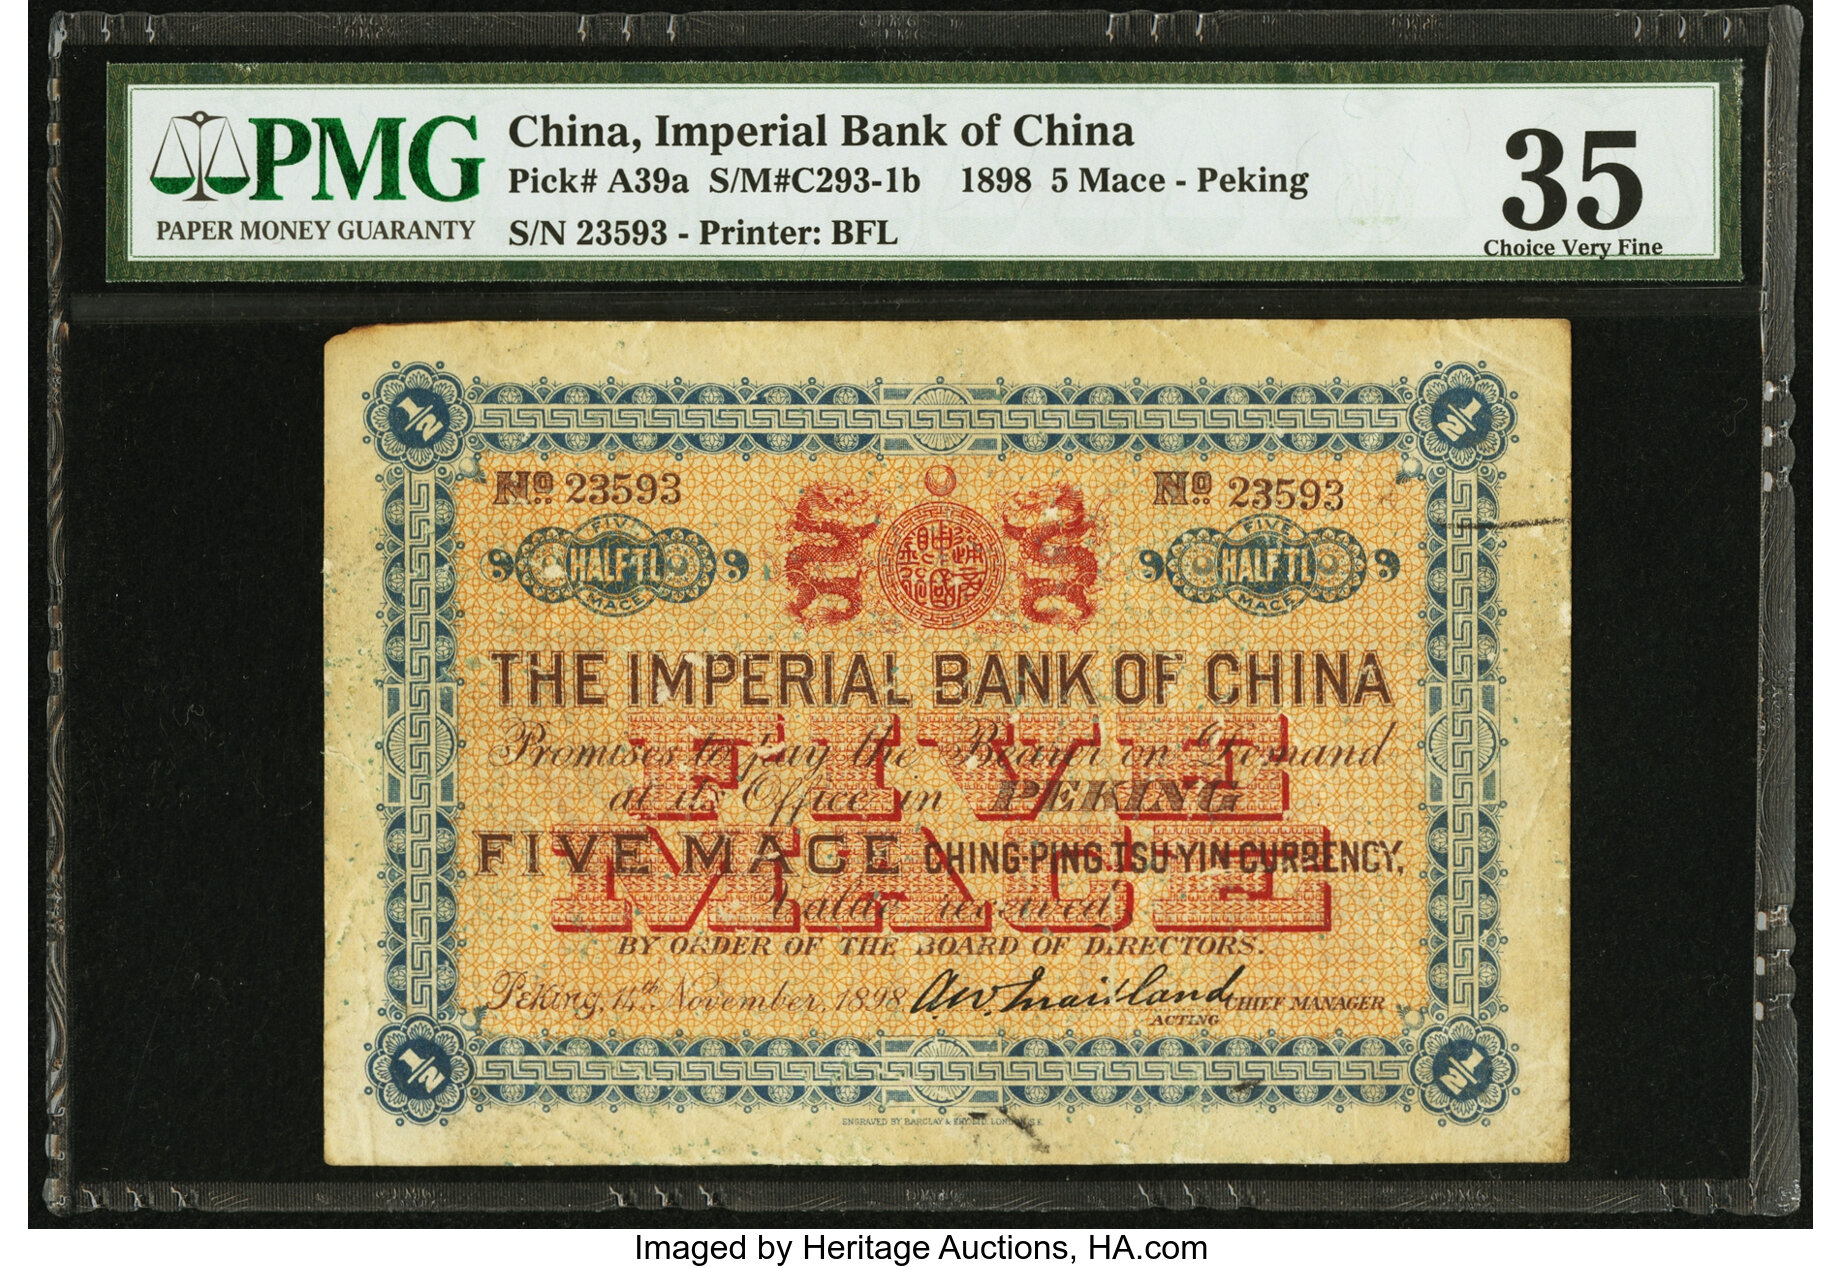 China Imperial Bank of China 5 Mace Peking 14.11.1898 Pick A39a